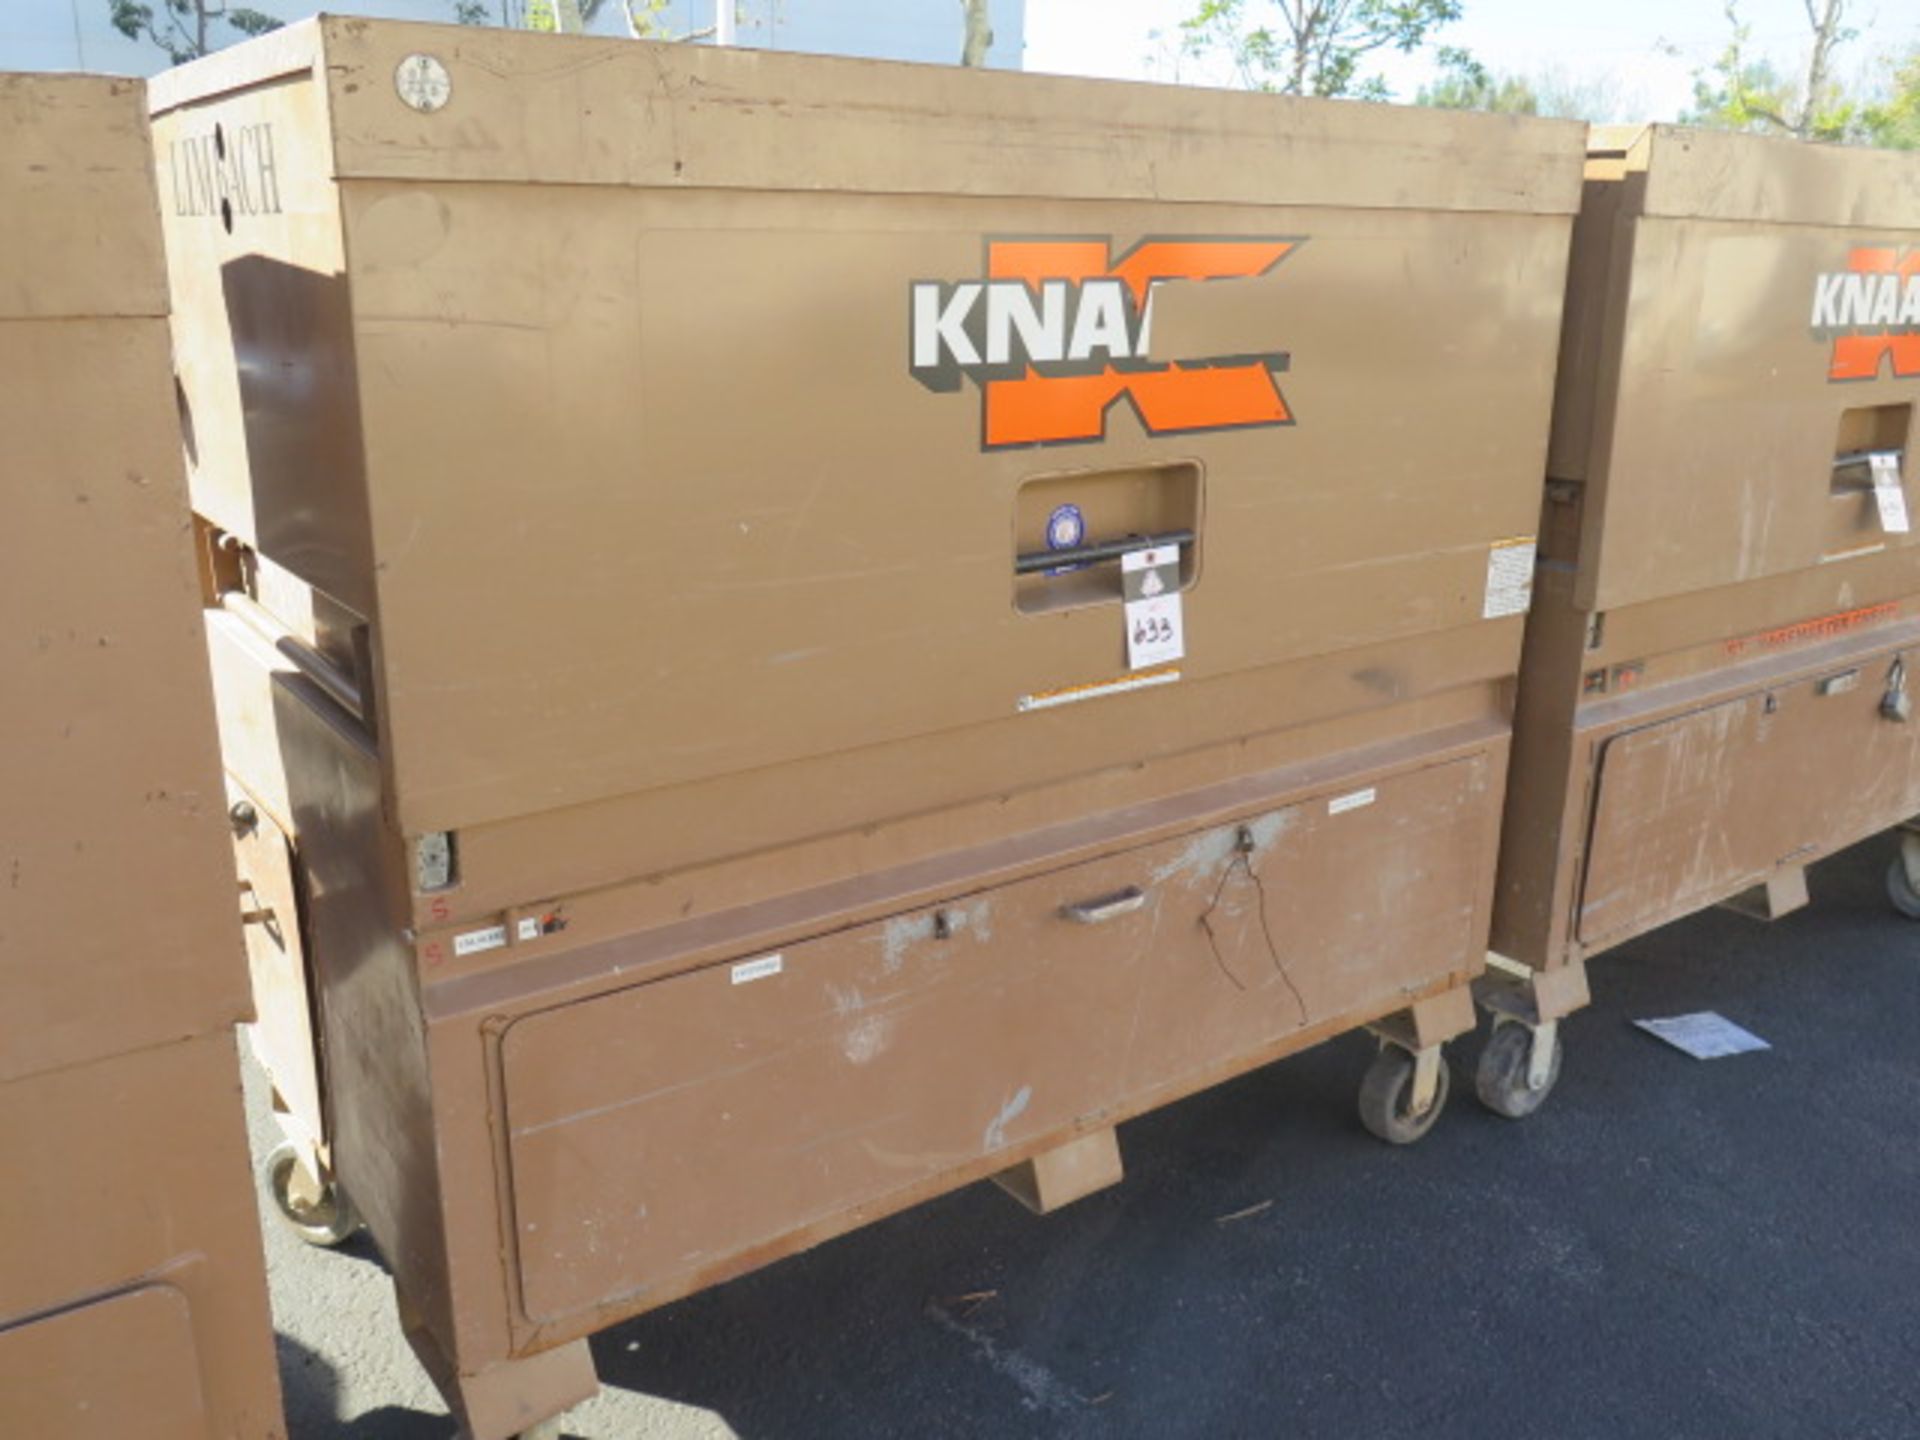 Knaack mdl. 89 Rolling Job Box (SOLD AS-IS - NO WARRANTY) - Image 2 of 6